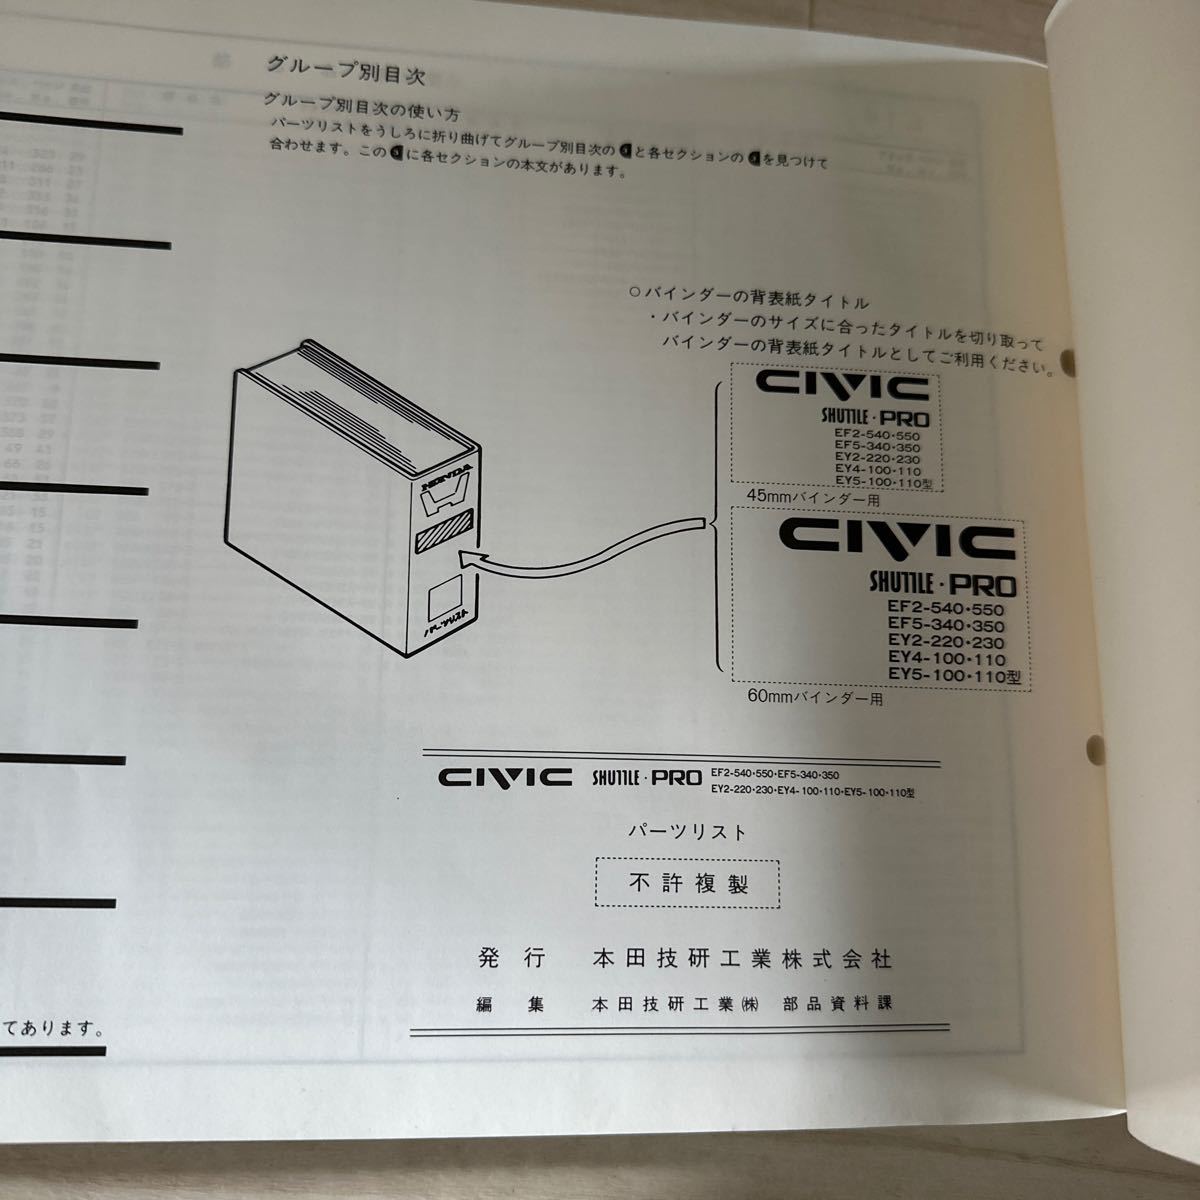 [A0105-46] Honda CIVIC SHUTTLE*PRO Civic Shuttle * Pro 3 version parts list / parts catalog / instructions / service book / repair book / wiring diagram 